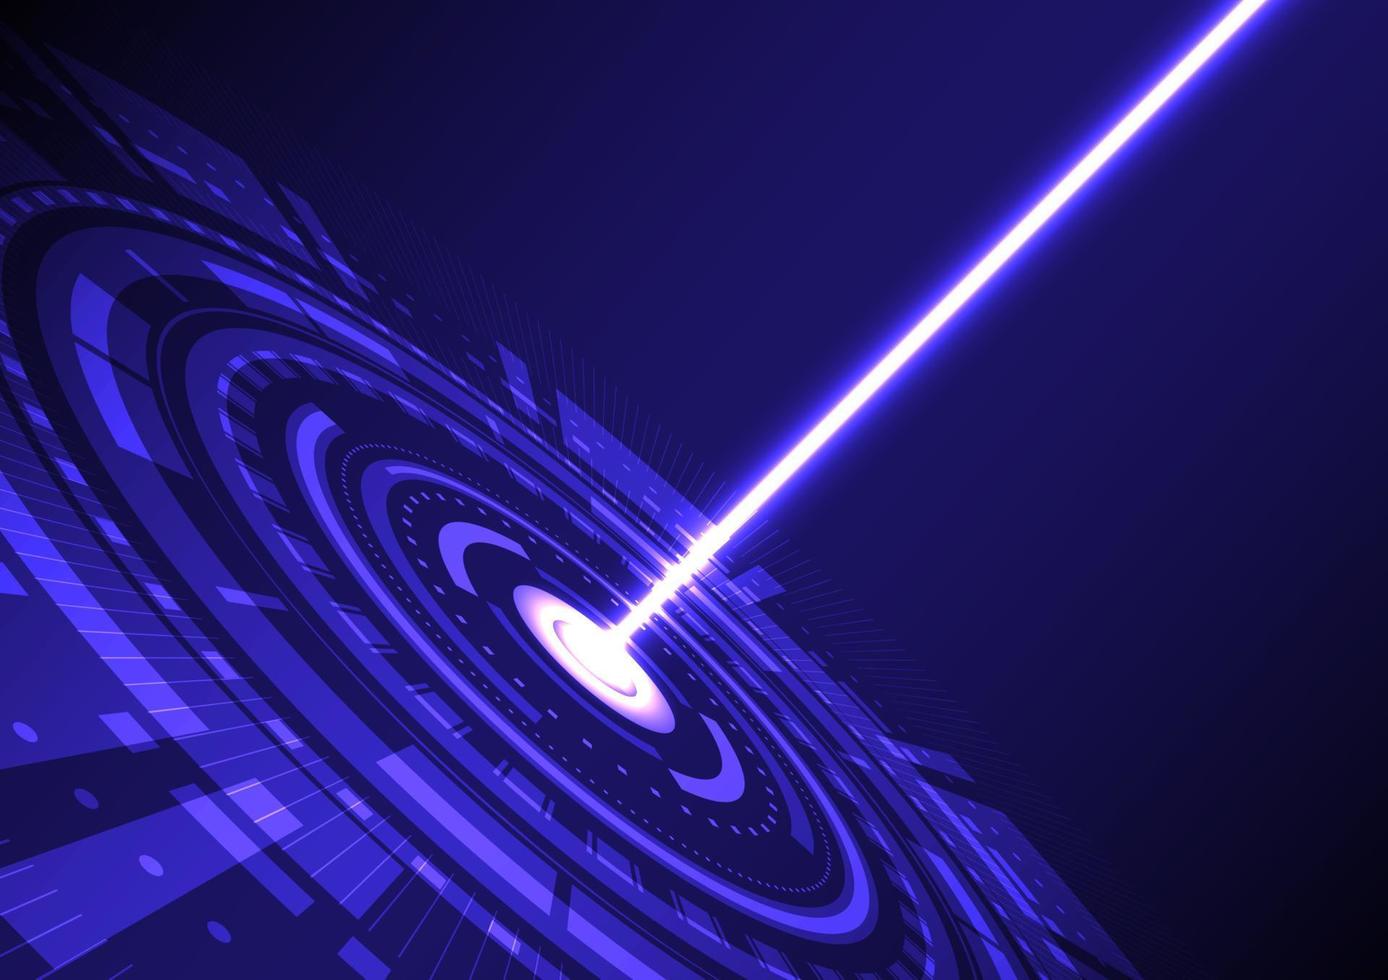 fondo de patrón de círculo azul vectorial abstracto con luz láser para tecnología científica futurista, visualización de datos grandes, concepto de innovación de transformación vector